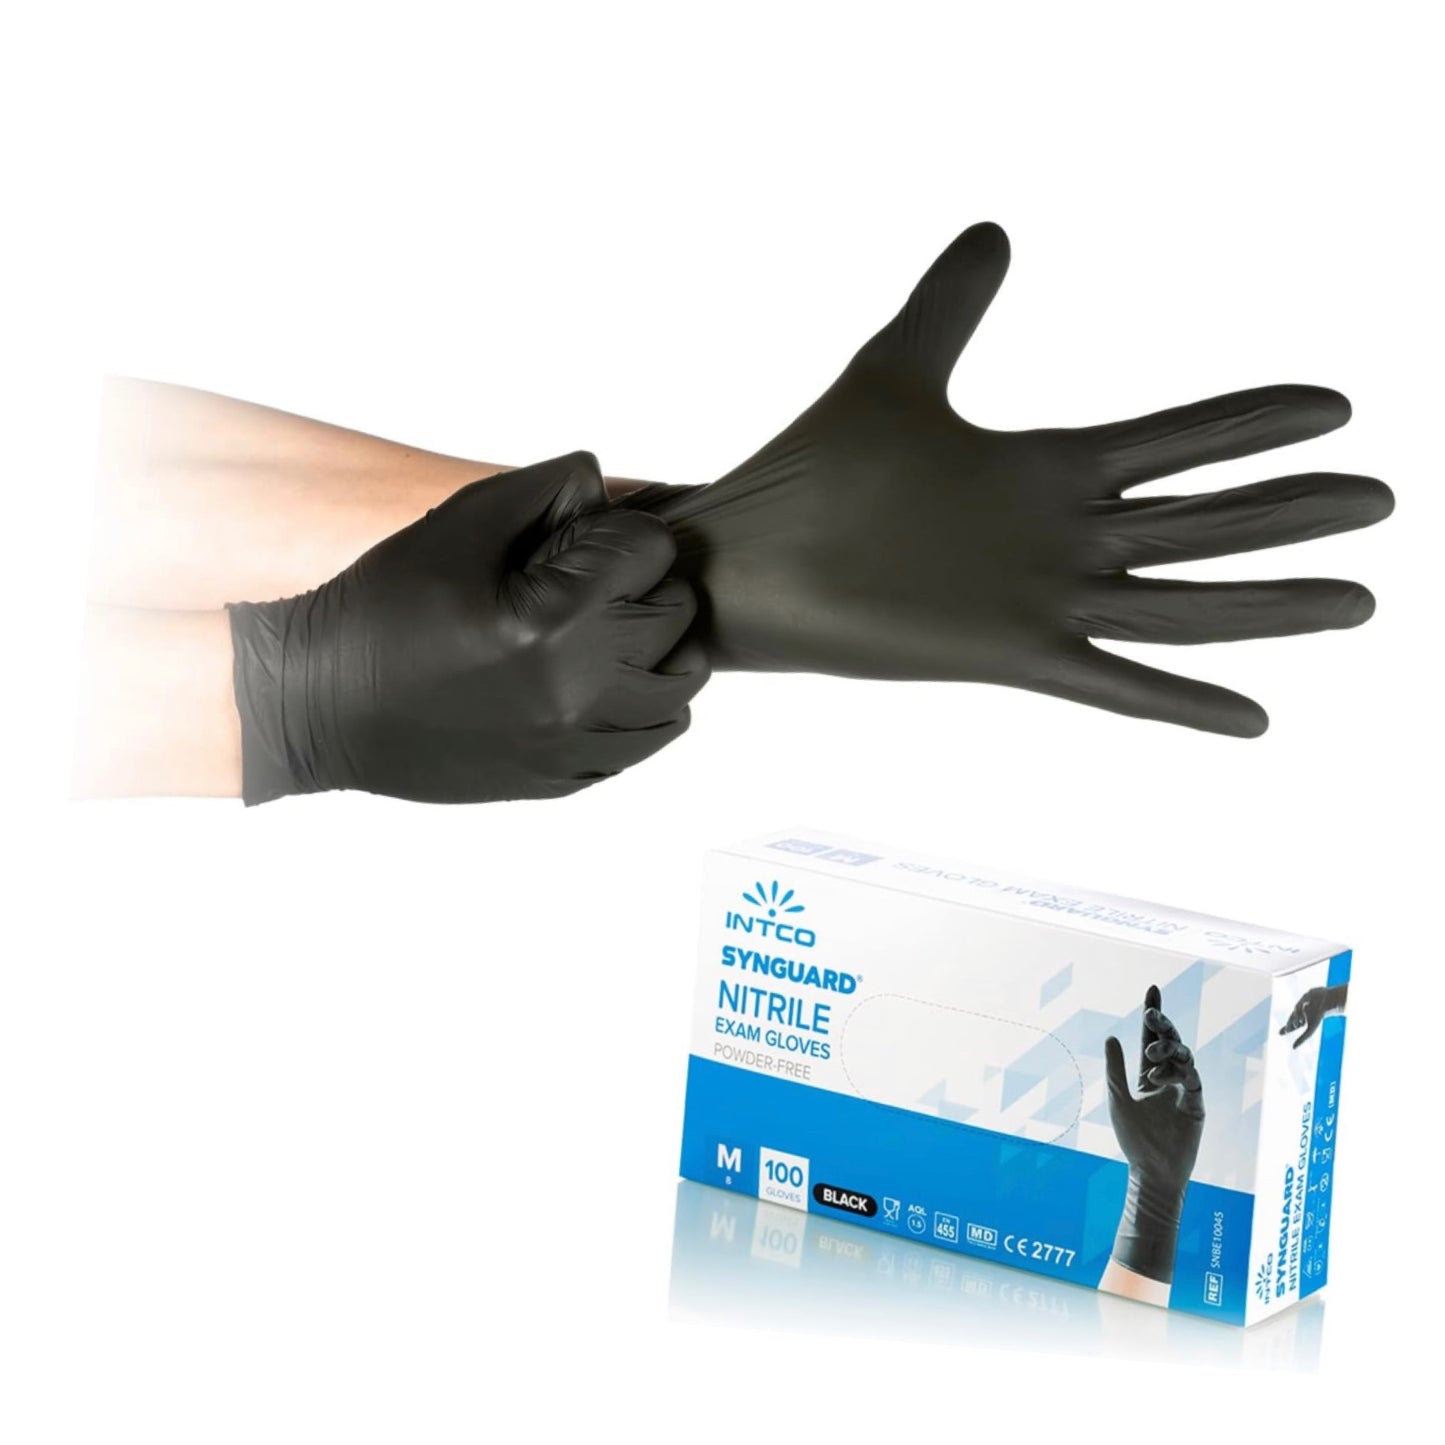 Intco Synguard Nitrile Exam Gloves Black powder Free qty- 100